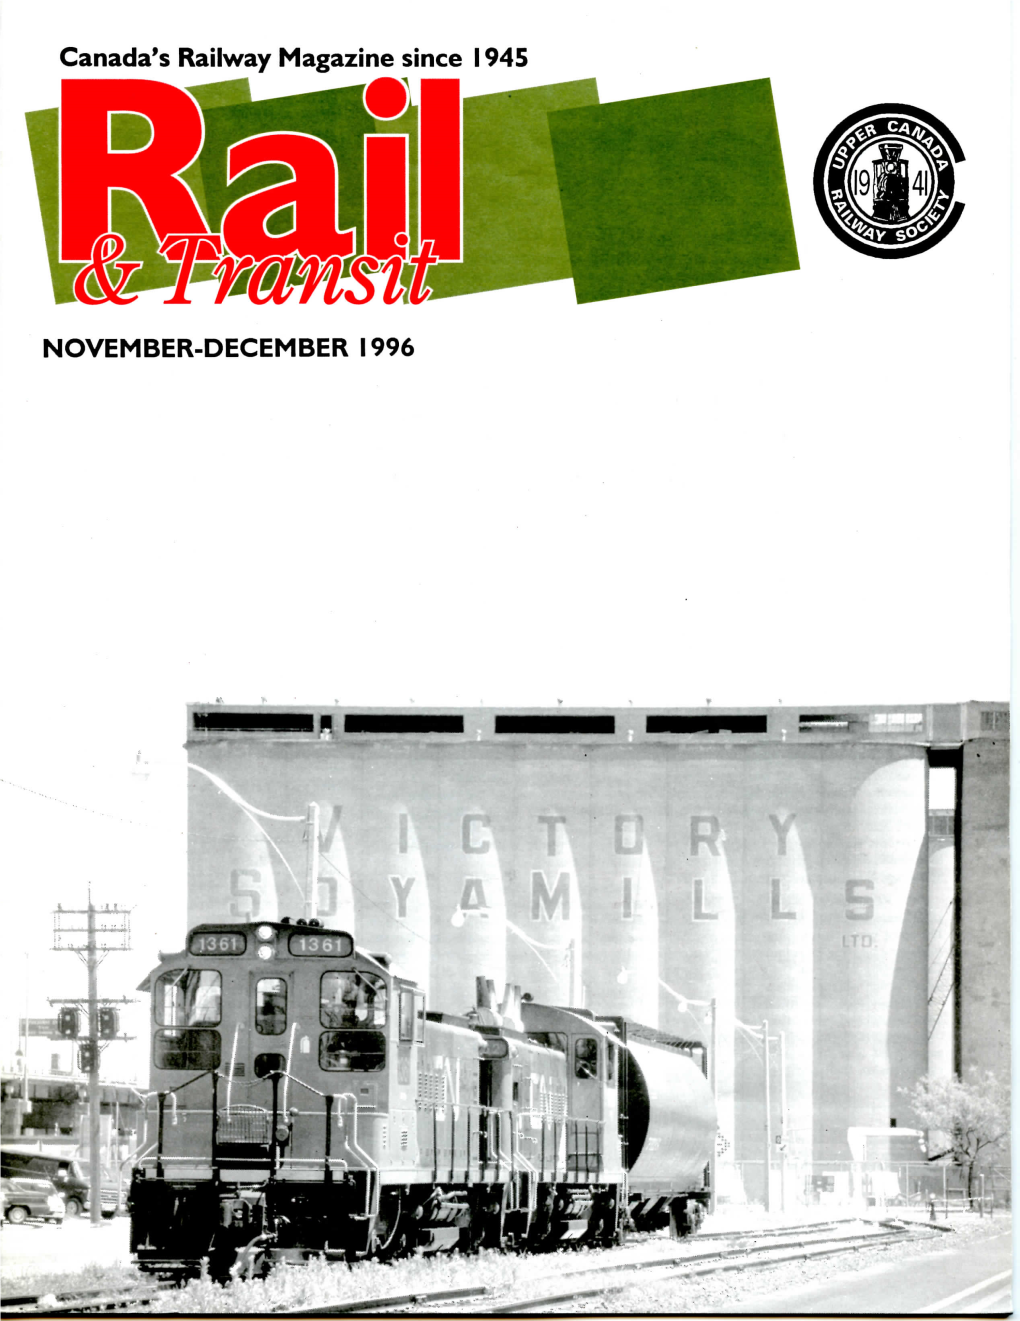 Canada's Railway Magazine Since 1945 NOVEMBER-DECEMBER 1996